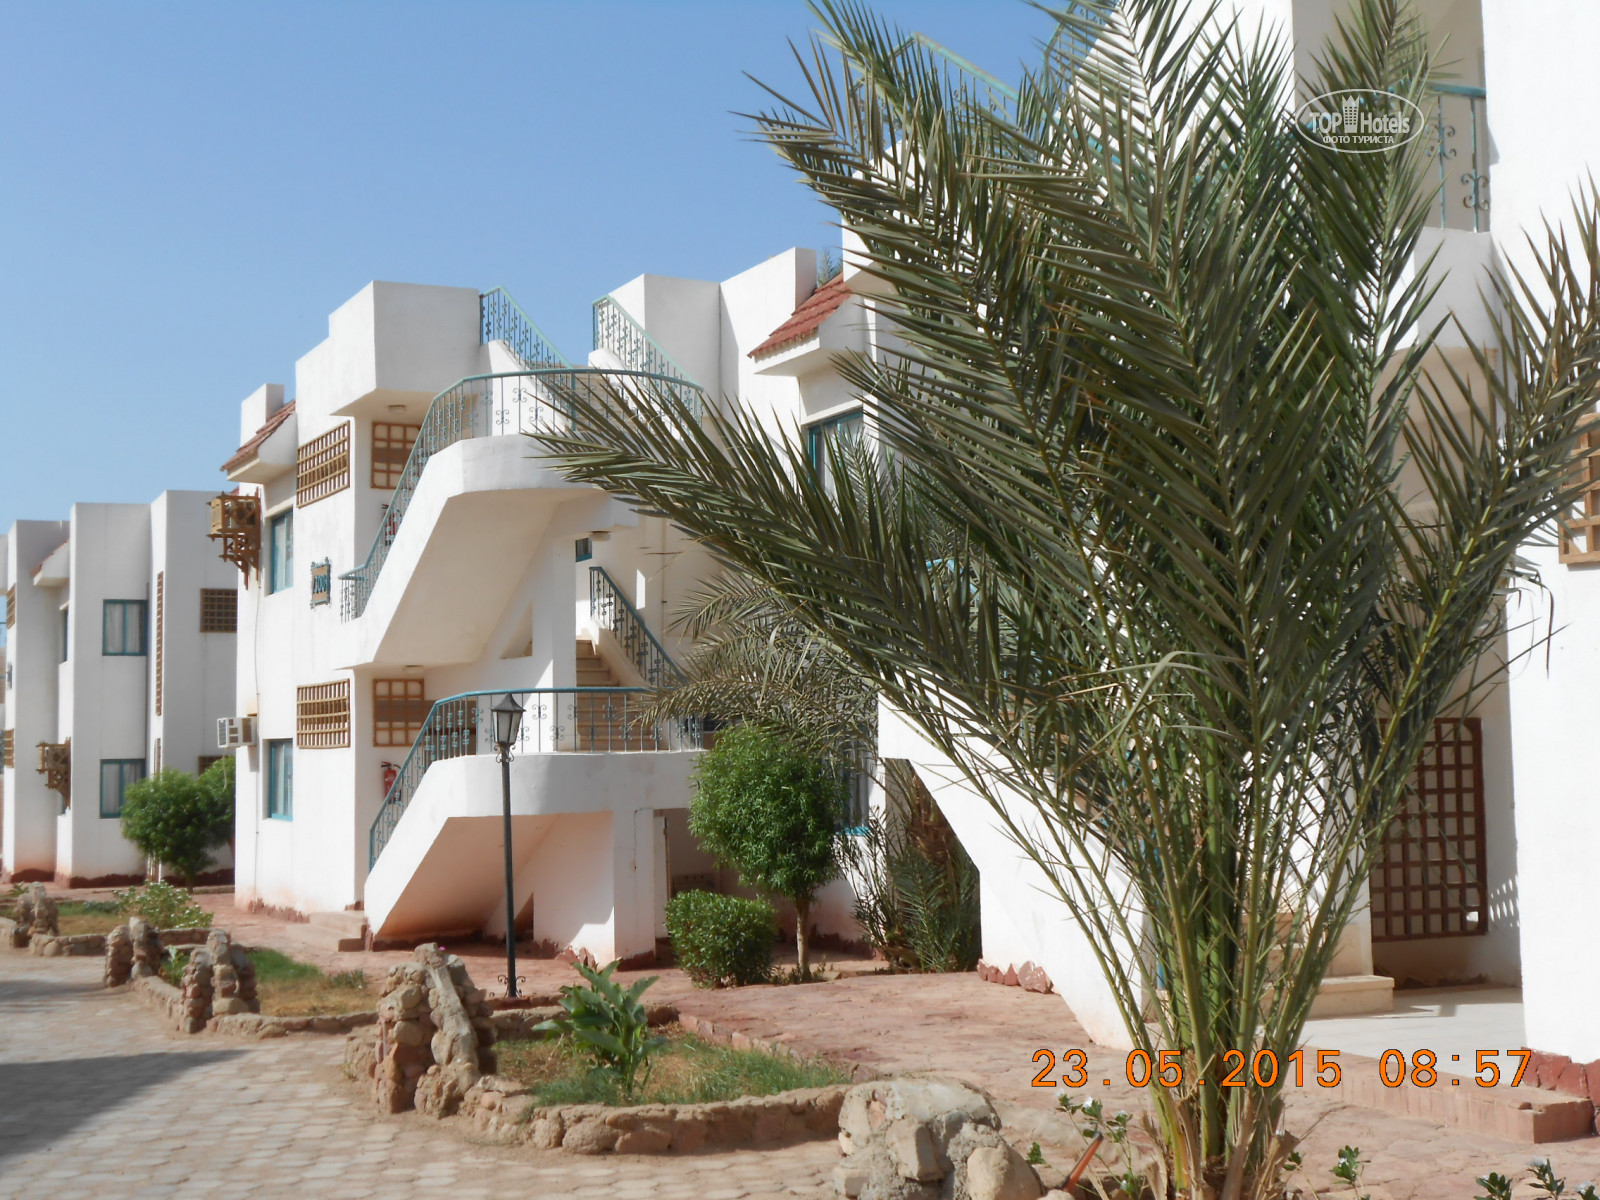 Sharm el-Sheikh Gardenia Plaza Resort prices